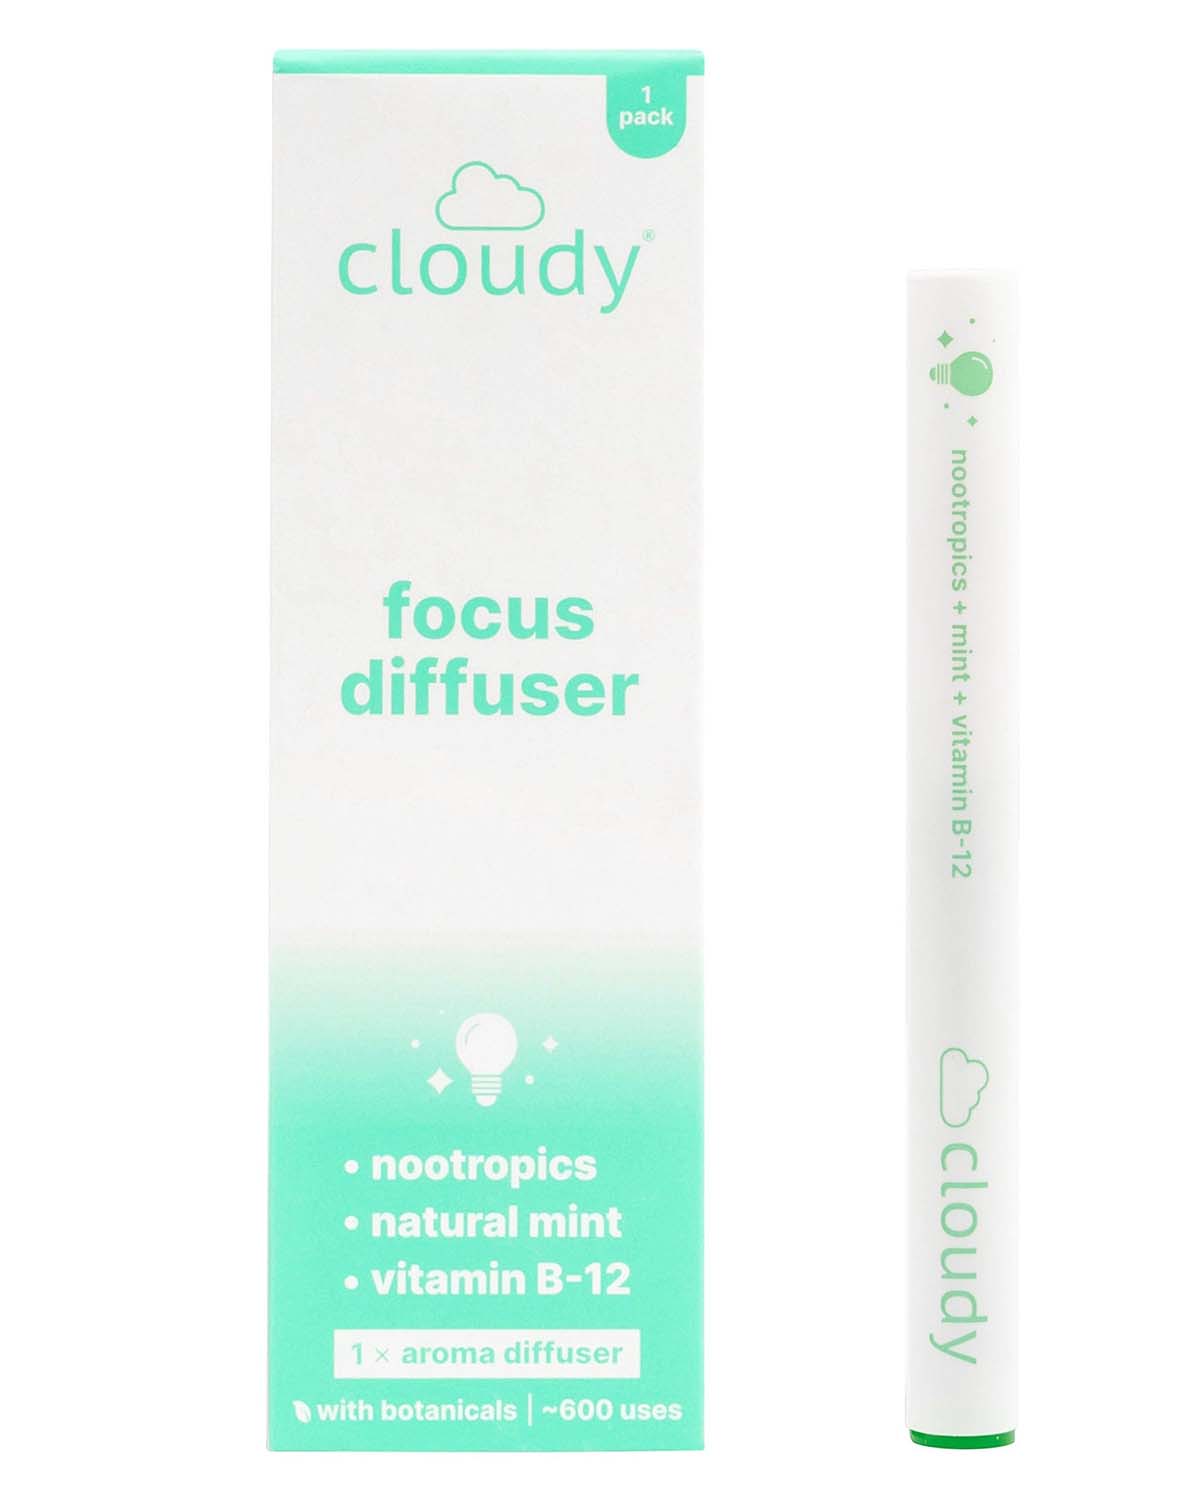 Cloudy Focus diffuser